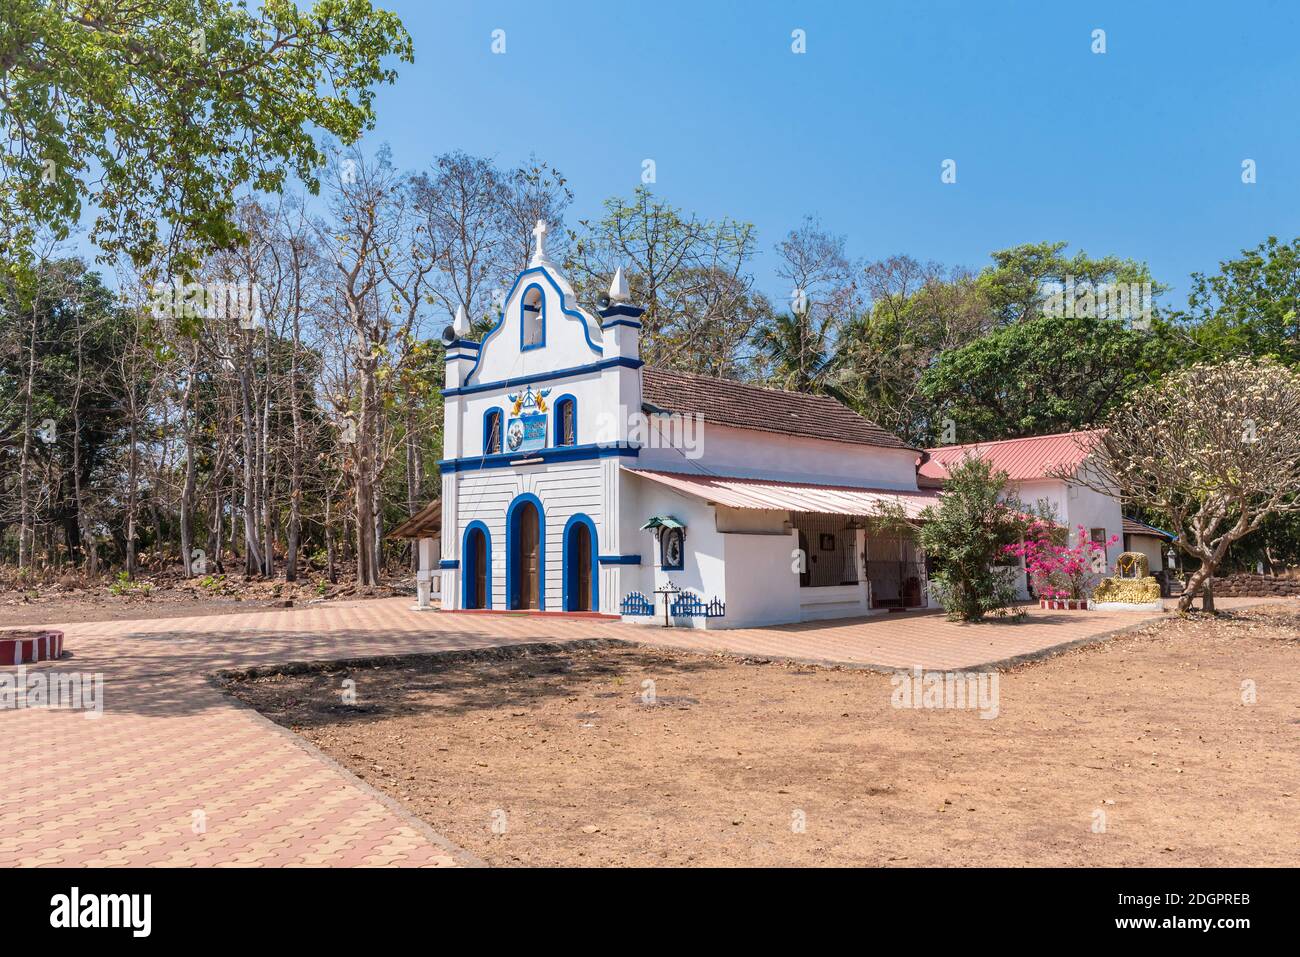 FORT CABO DE RAMA, GOA, INDIA - MARCH 18, 2019: Catholic church Igreja de Santo Antonio built by Portuguese colonizers in Fort Cabo de Rama in Goa, In Stock Photo